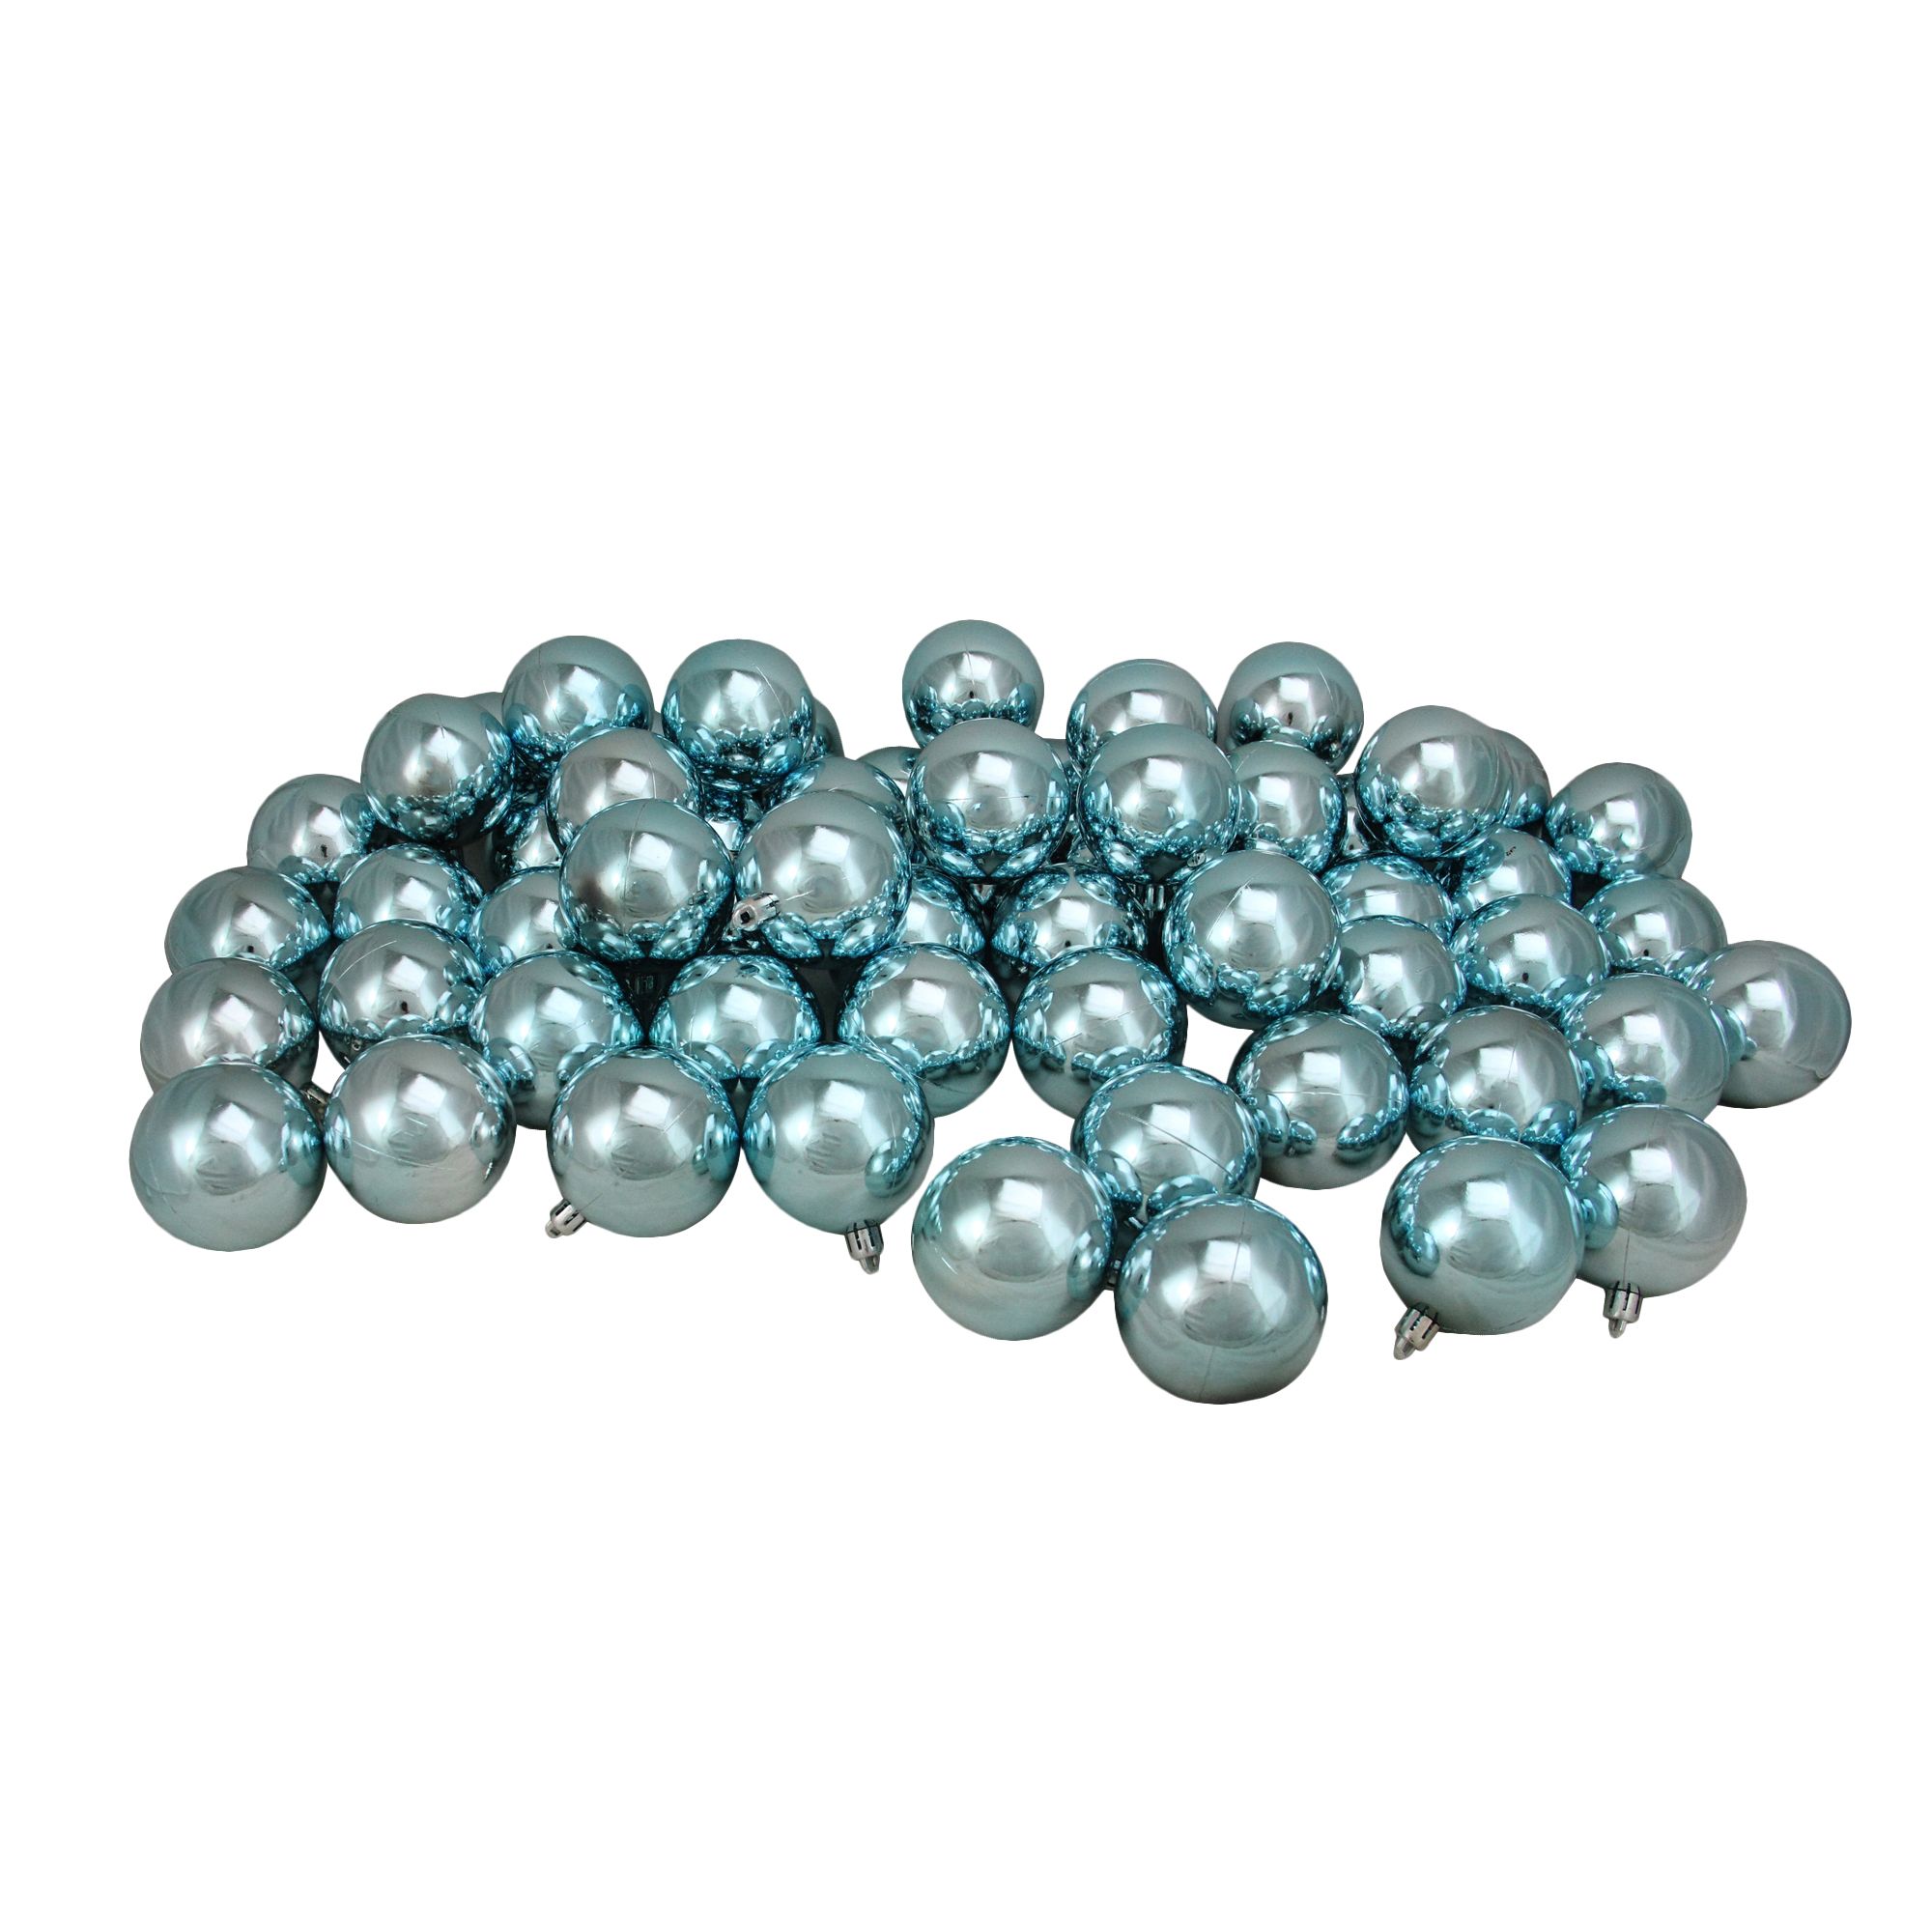 Northlight 2.5&quot; Shatterproof Shiny Christmas Ball Ornaments, 60 ct. - Mermaid Blue